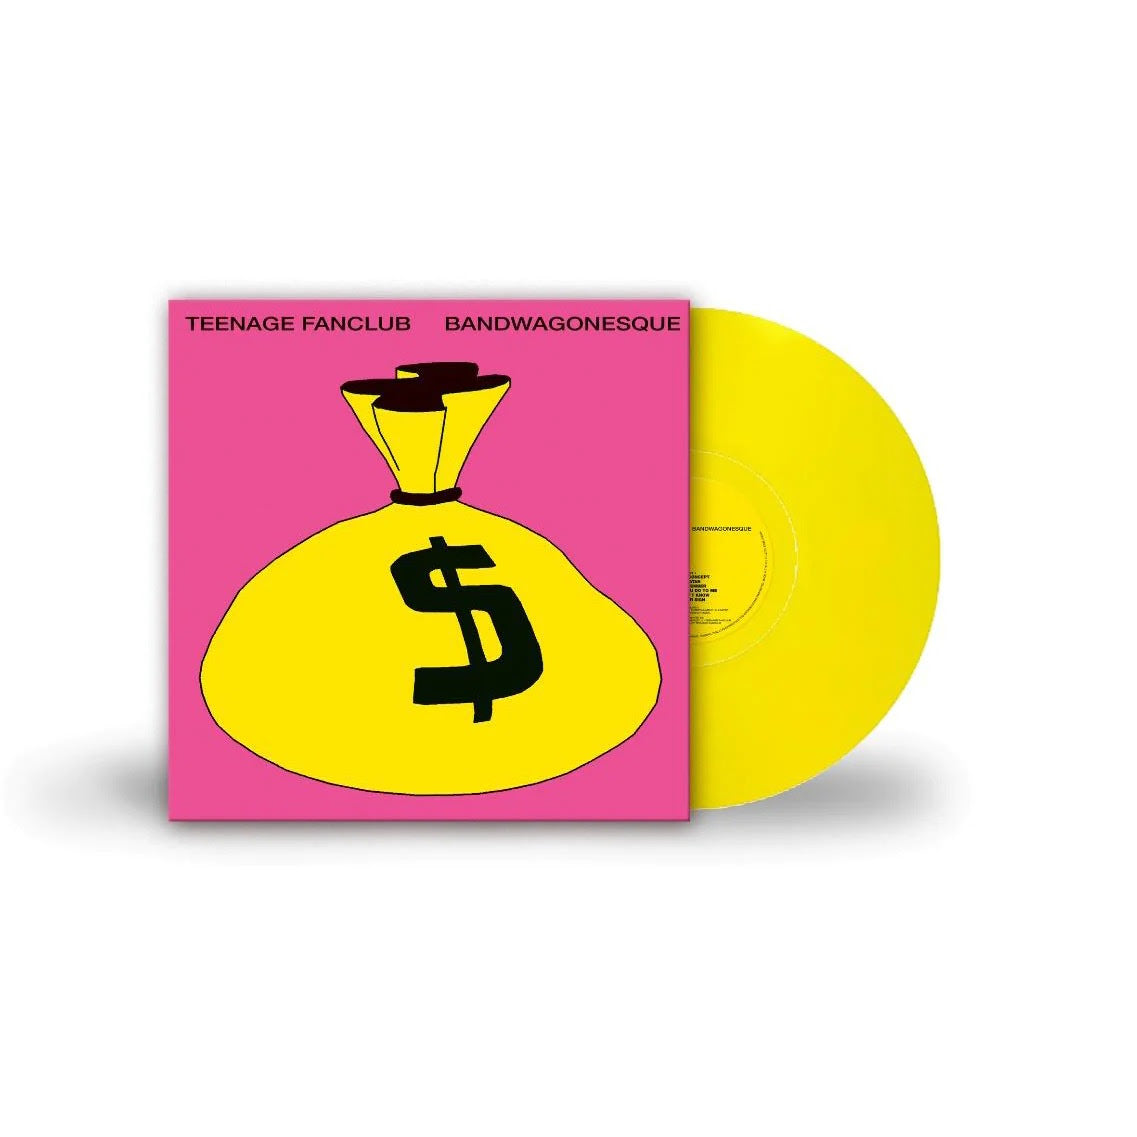 Teenage Fanclub - Bandwagonesque | Buy the Vinyl LP from Flying Nun Records 